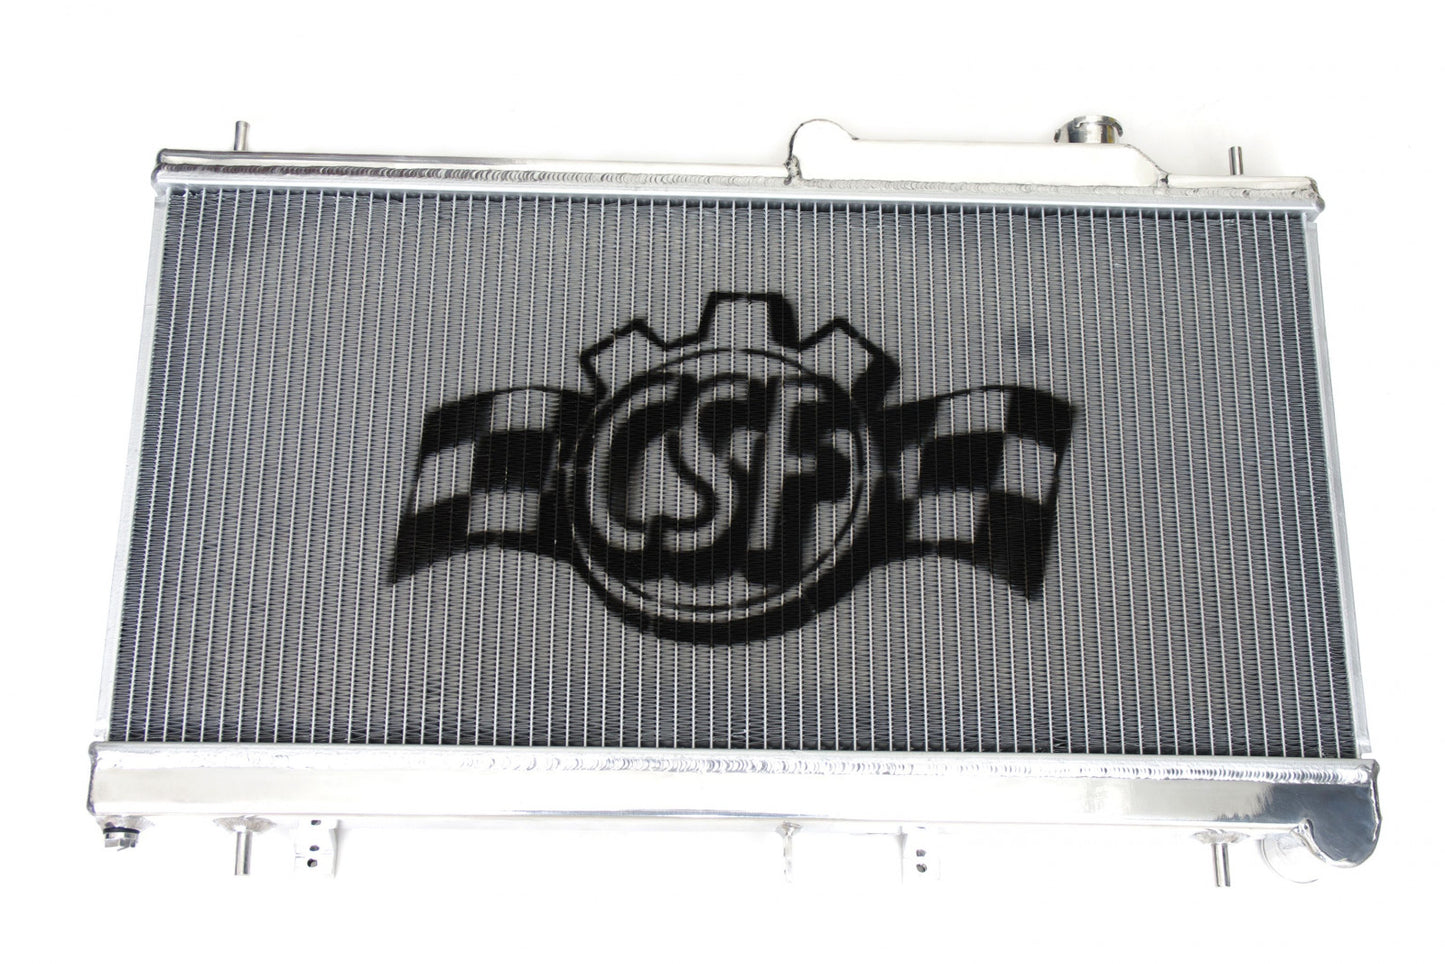 CSF Subaru WRX & STI  2-Row 42mm Race-Spec Radiator